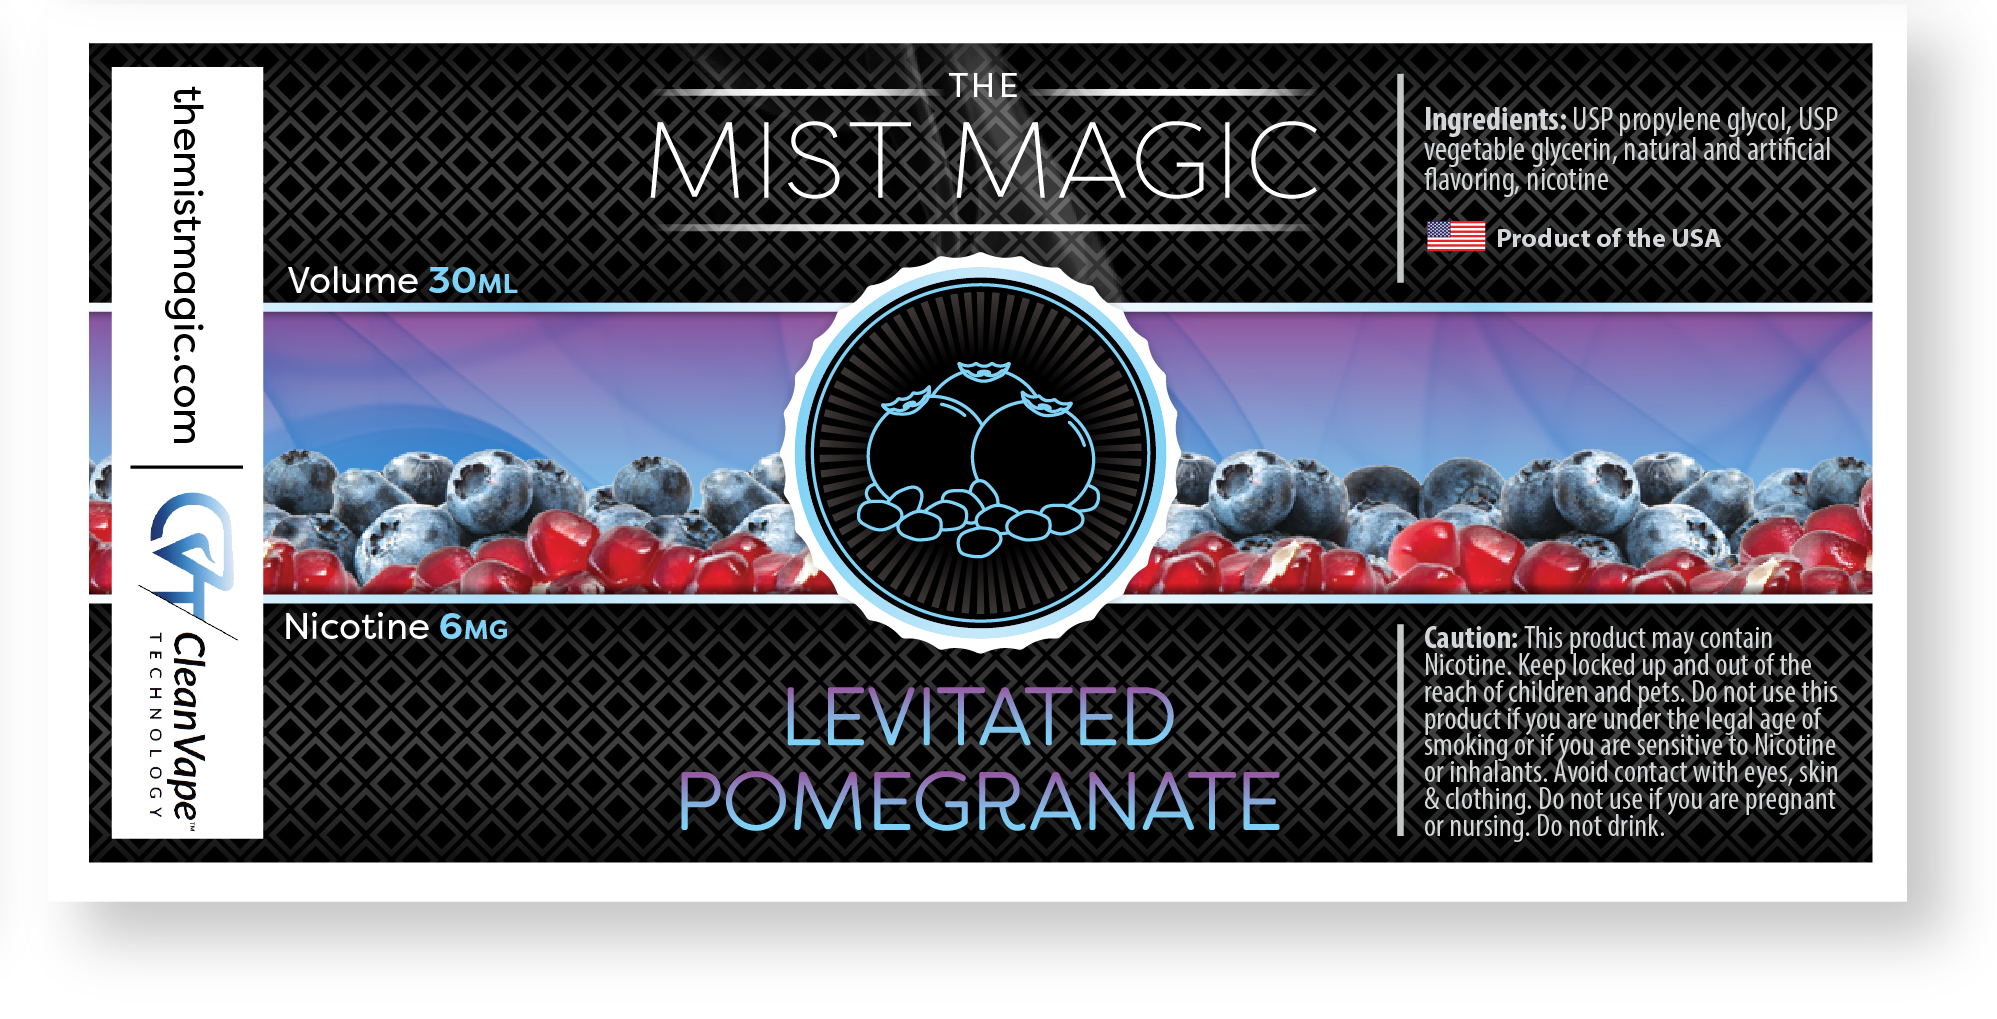 mist magic levitated pomegranate package